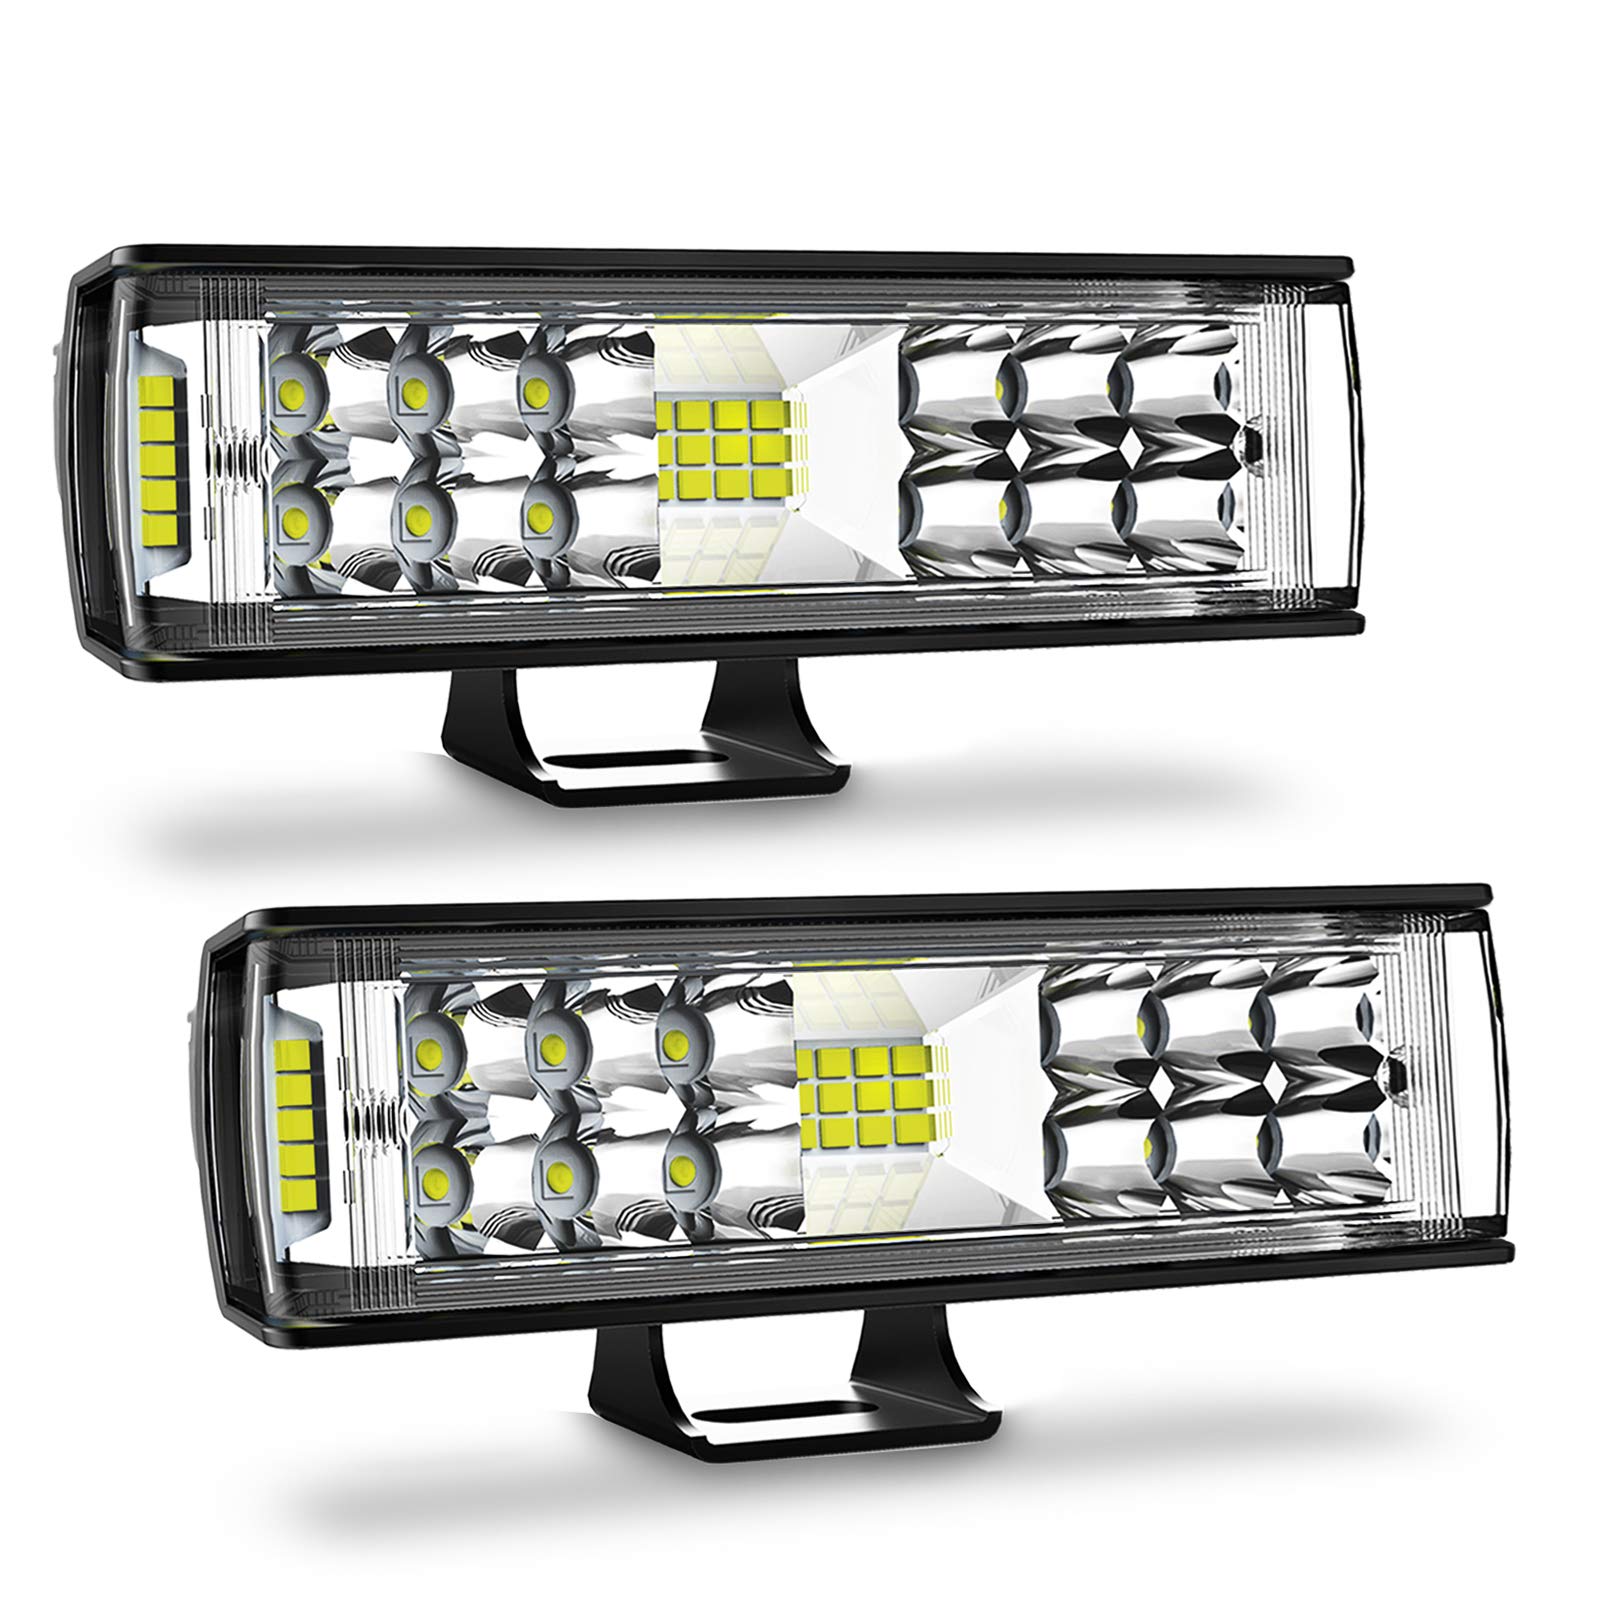 Autofeel LED 作業灯 ワークライト LED投光器 7インチ 12v-24v用 16w 3600LM IP68防水 広角照明 拡散タイプ ledライト タイヤ灯 車幅灯